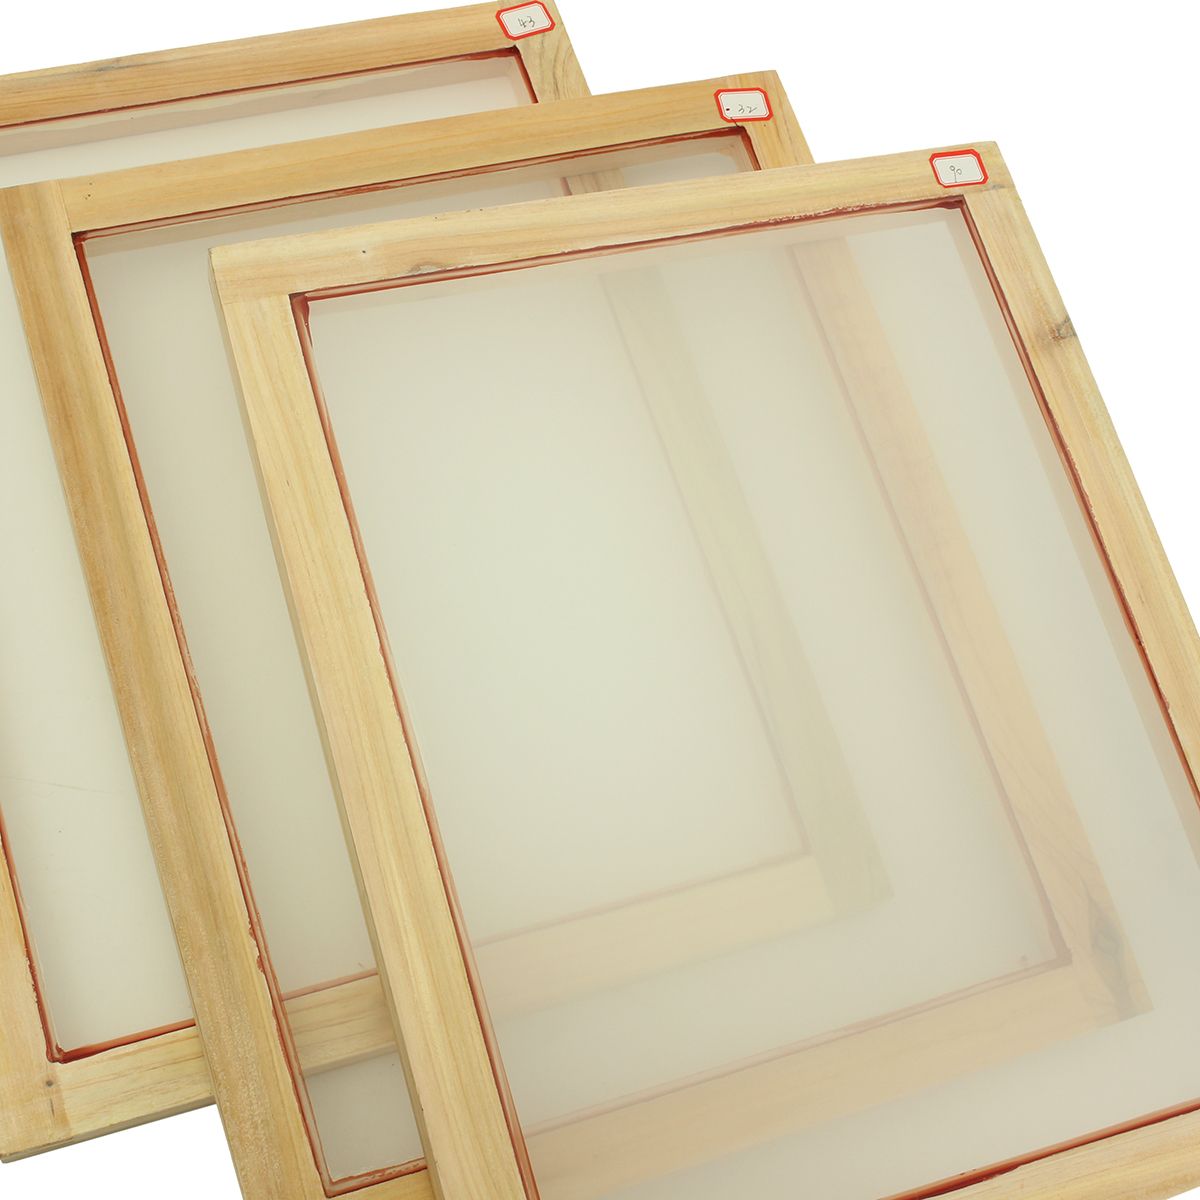 A3-Silk-Screen-Printing-Stretcher-Wooden-Screen-Printing-Frames-Fittings-Art-Printmaking-45x345cm-1274725